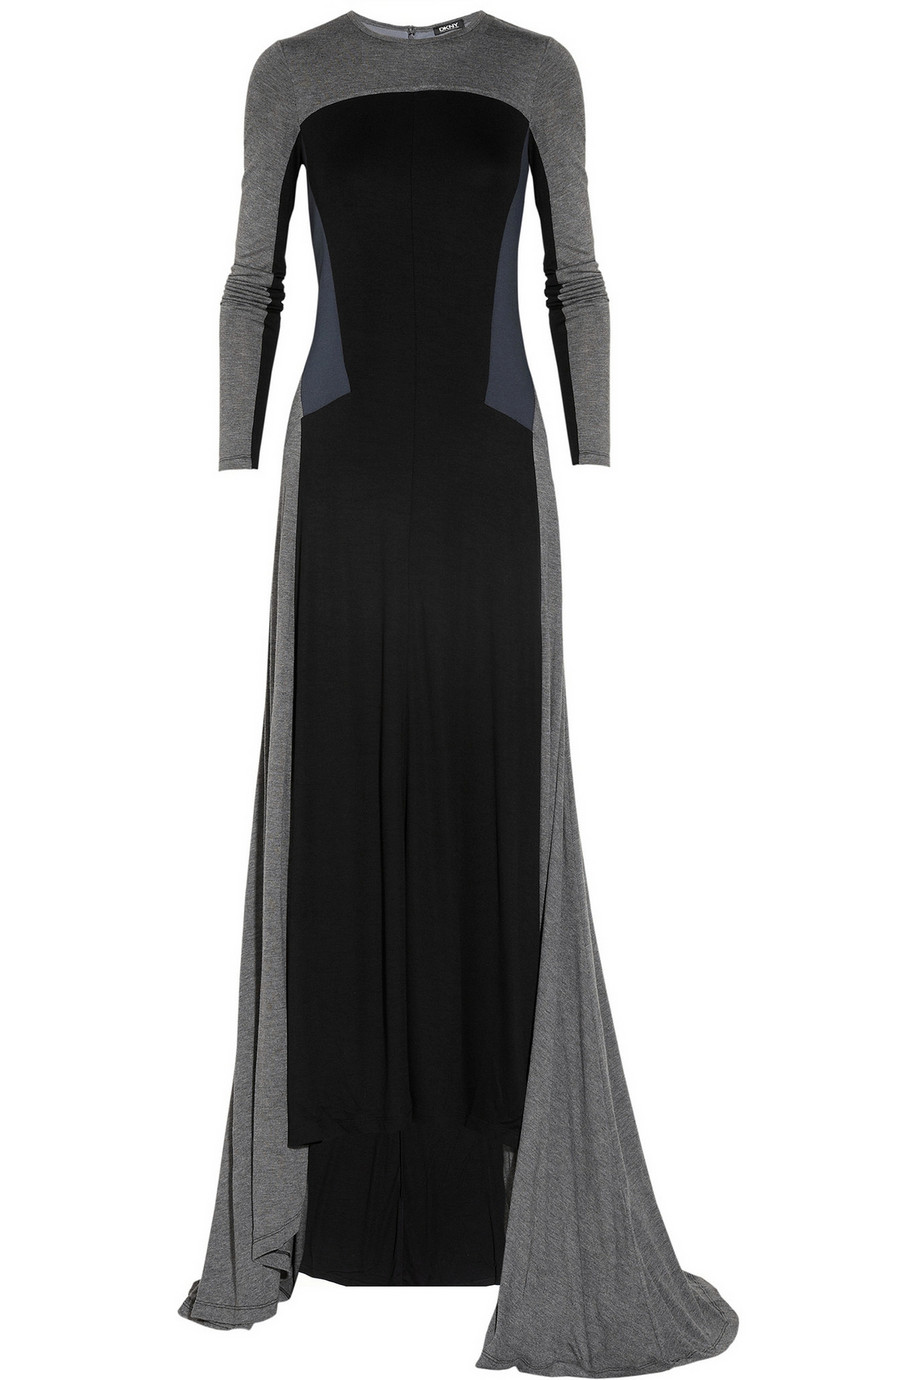 Lyst - Dkny Colorblock Jersey Maxi Dress in Gray